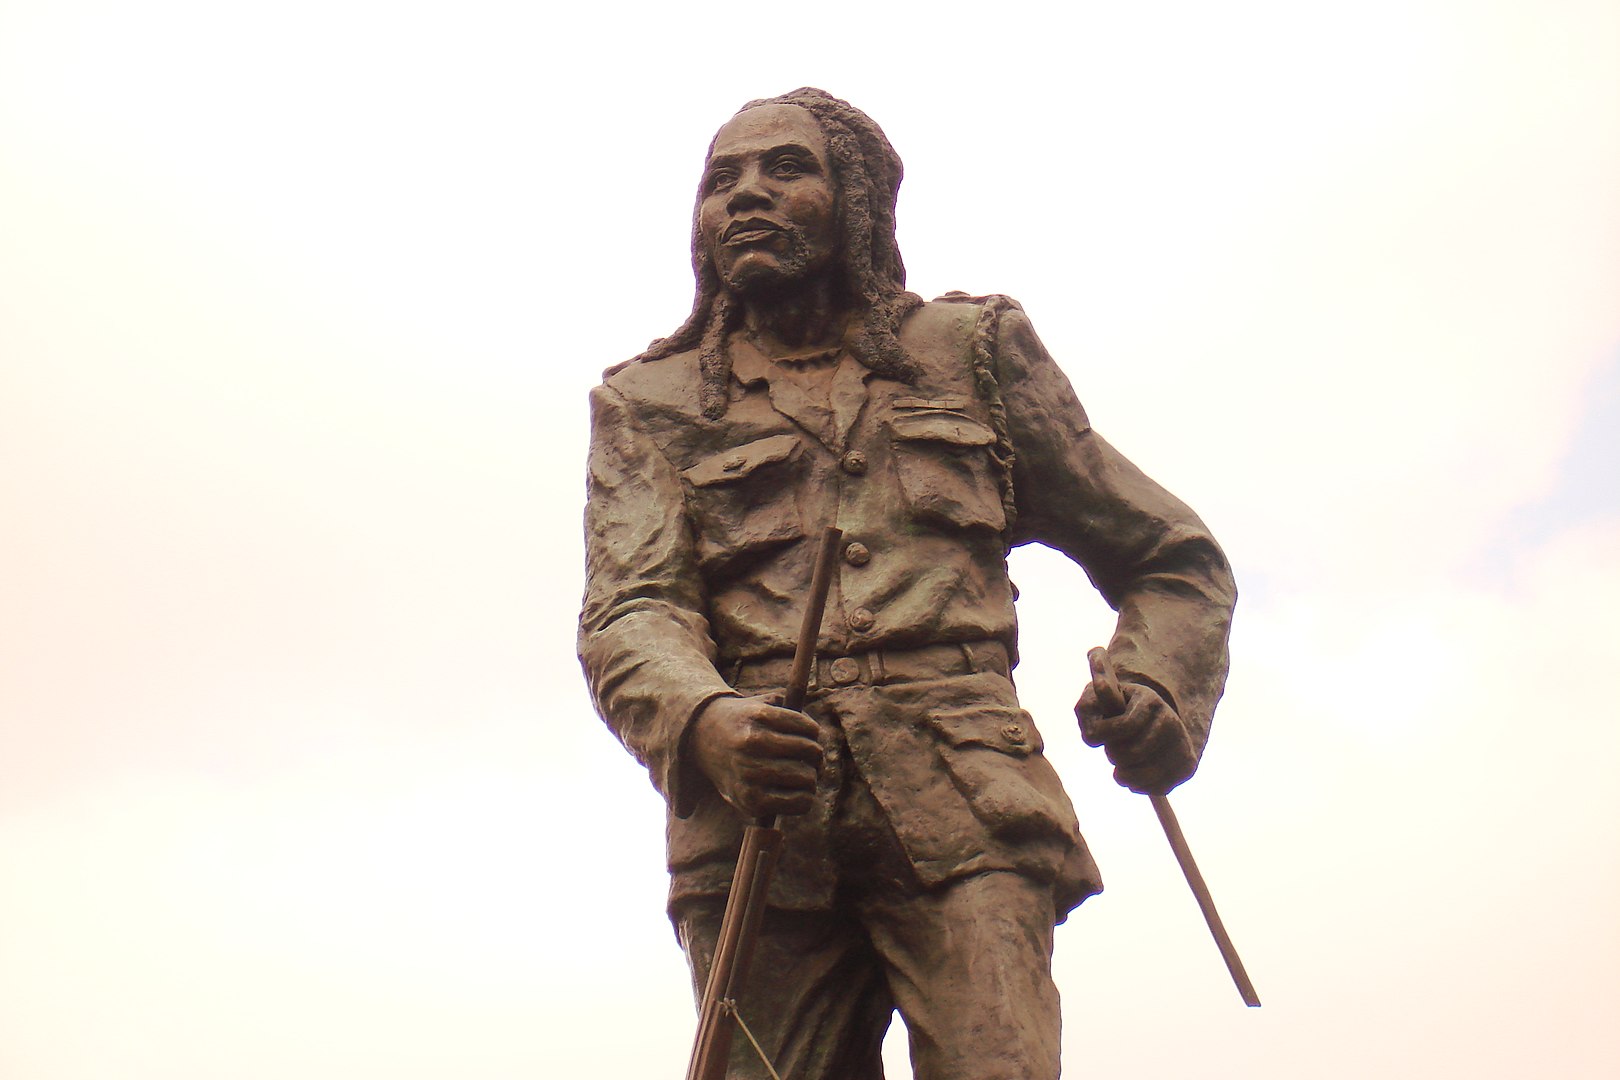 Statue of Dedan Kimathi in Nairobi, Kenya